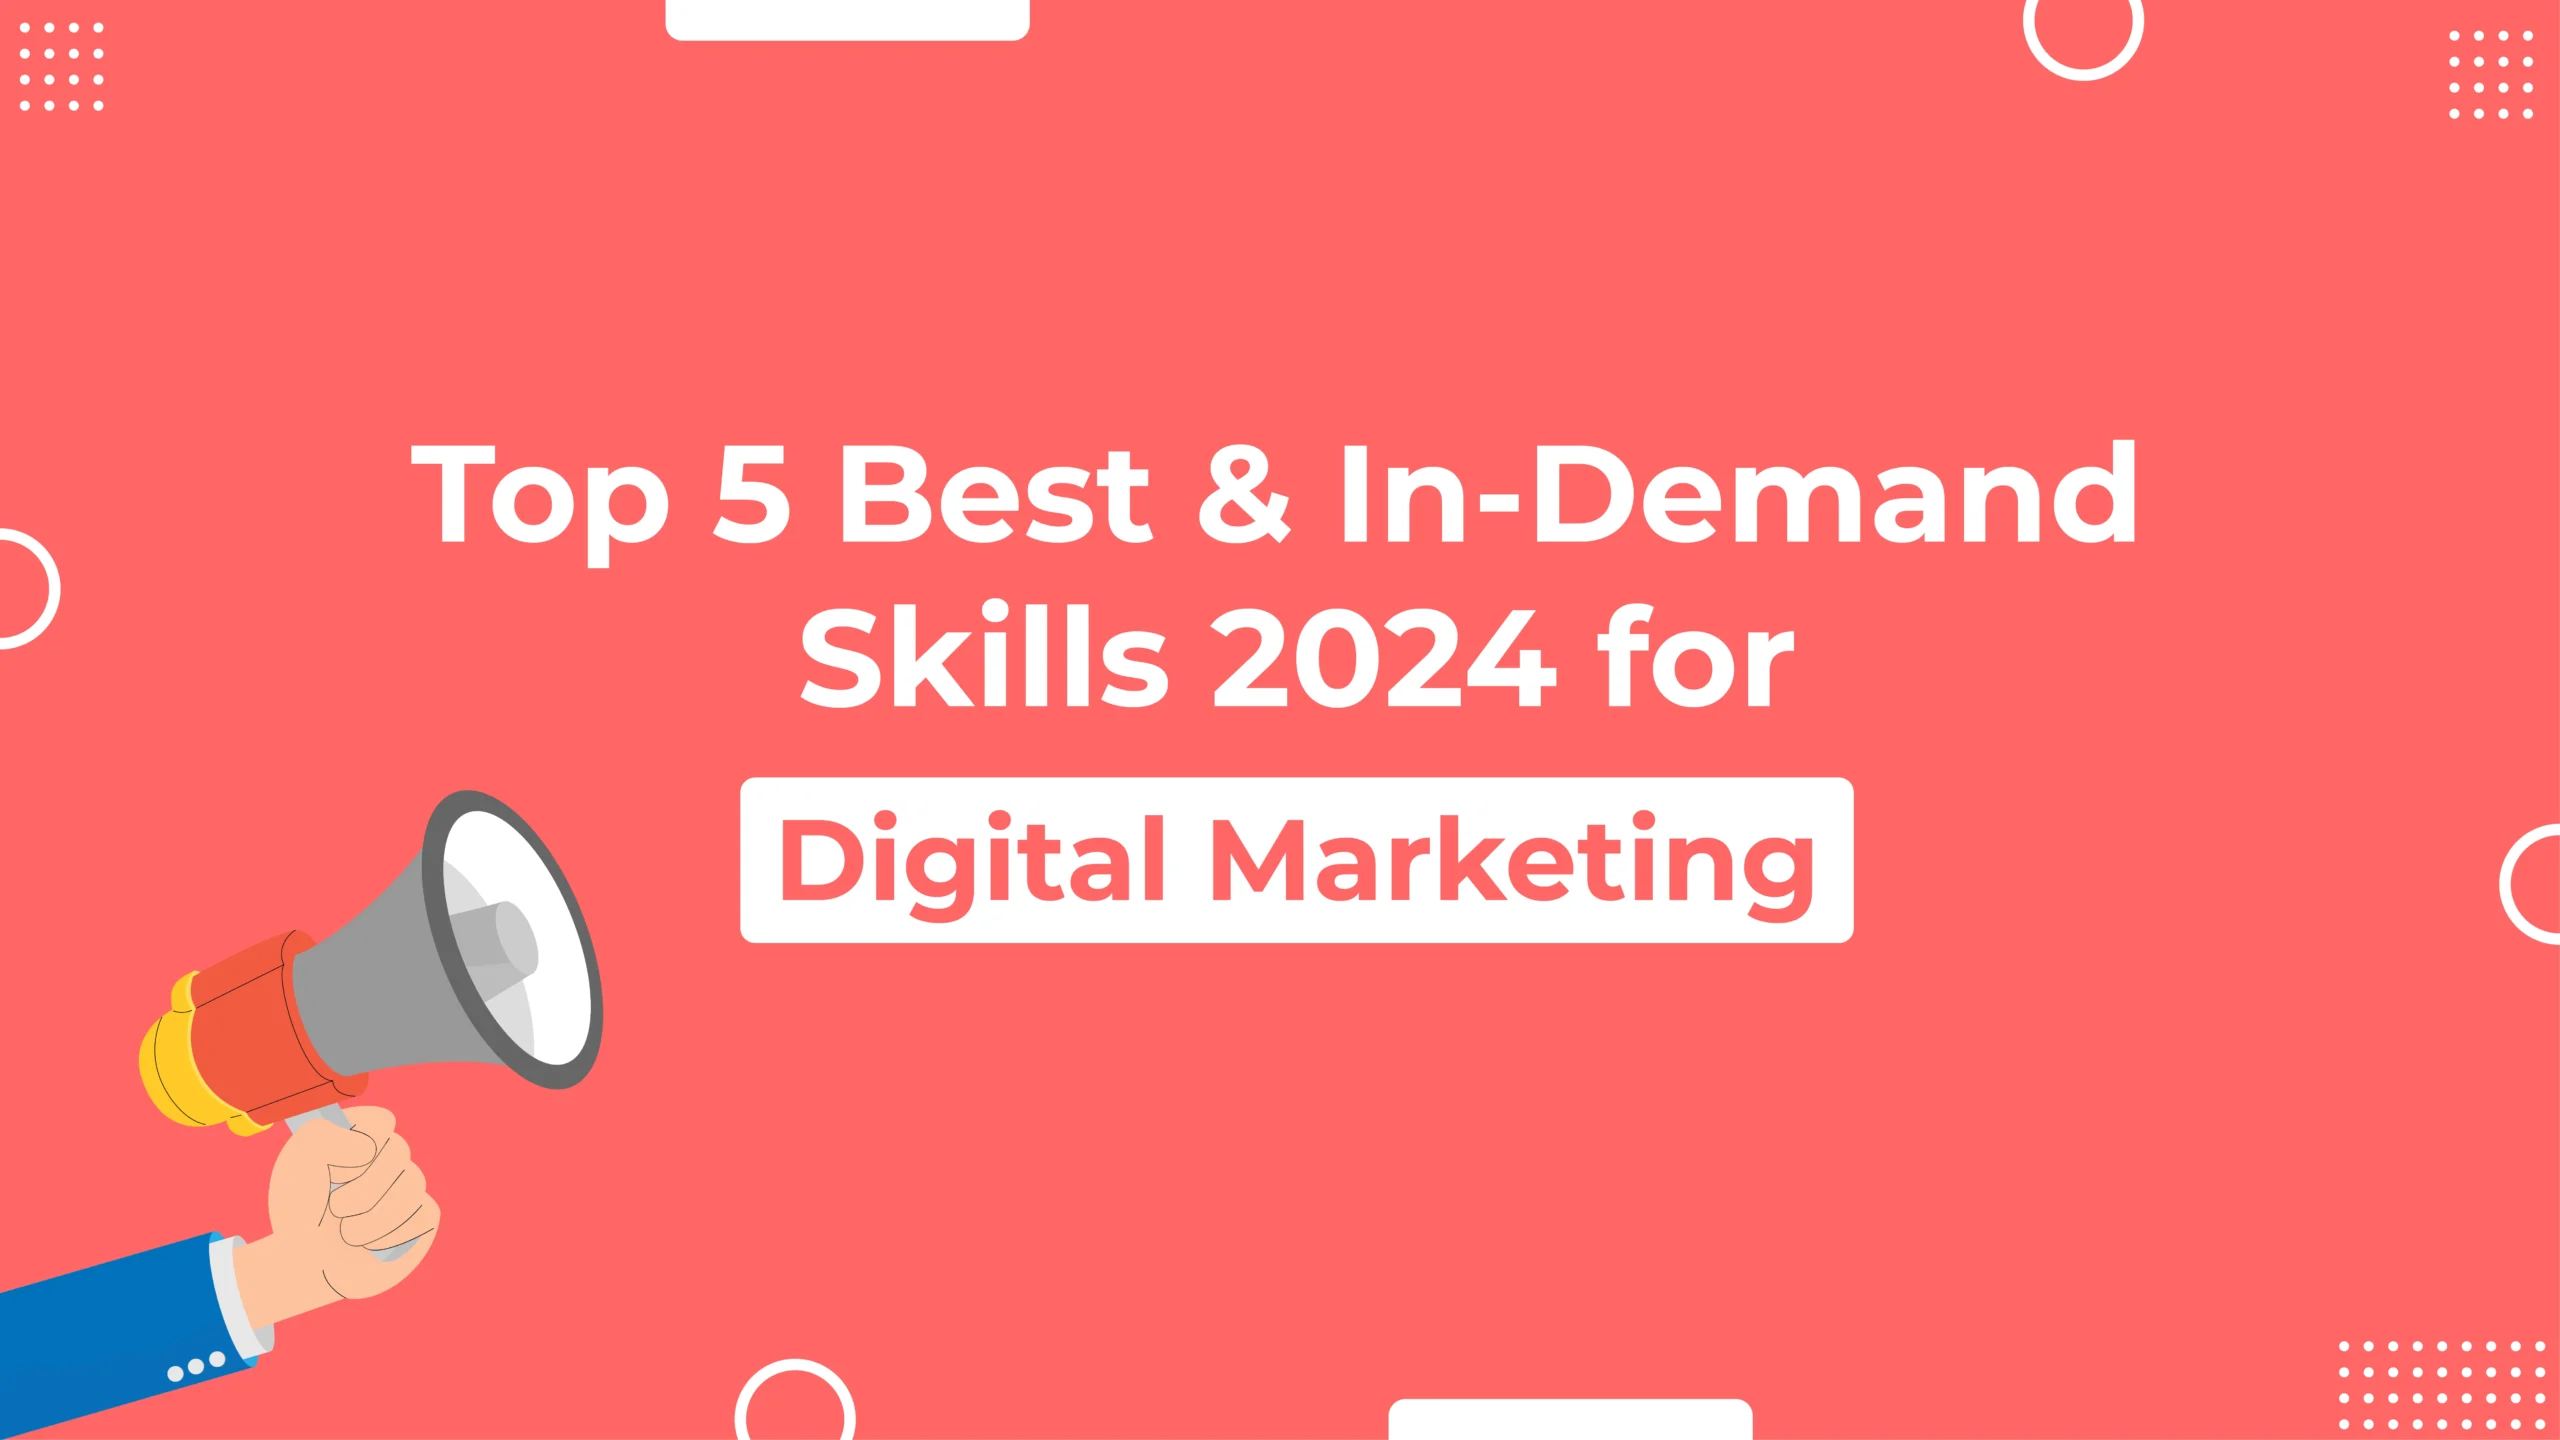 Digital Marketing Agency: Top 5 Best & In-Demand Skills 2024